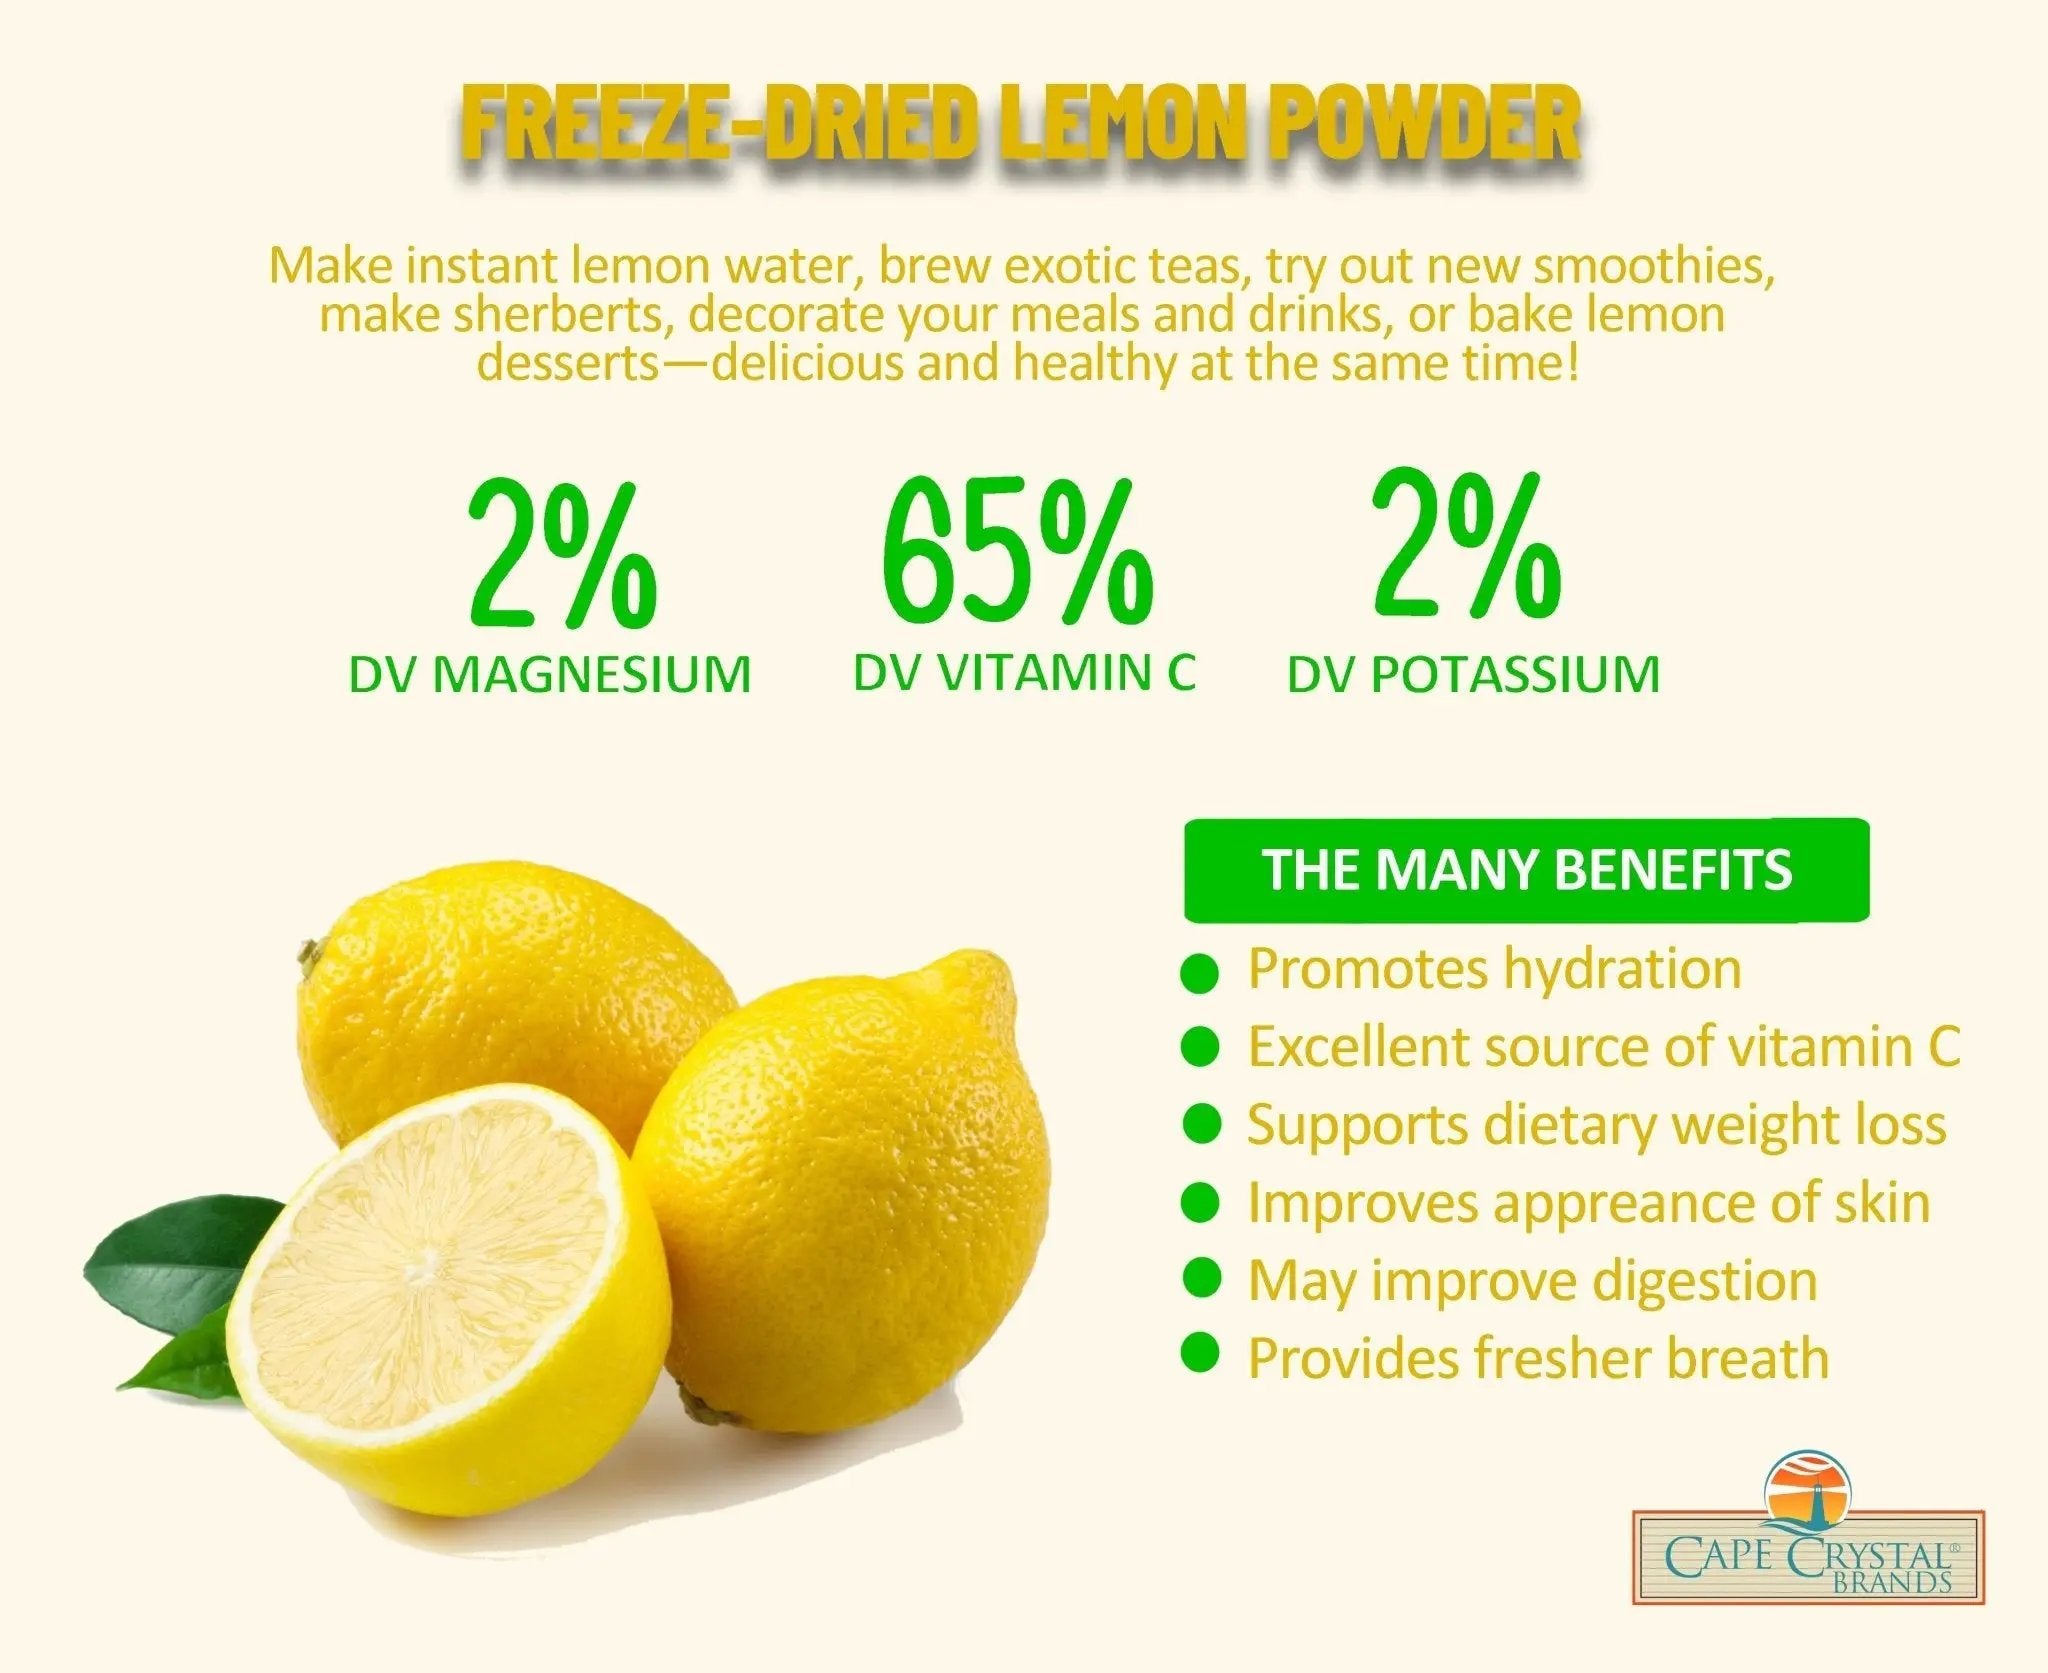 Cape Crystal Lemon Powder Goodness – 8-oz., Freeze-Dried for Superior Taste, USDA Certified Organic, Non-GMO, Gluten Free, Vegan - Cape Crystal Brands